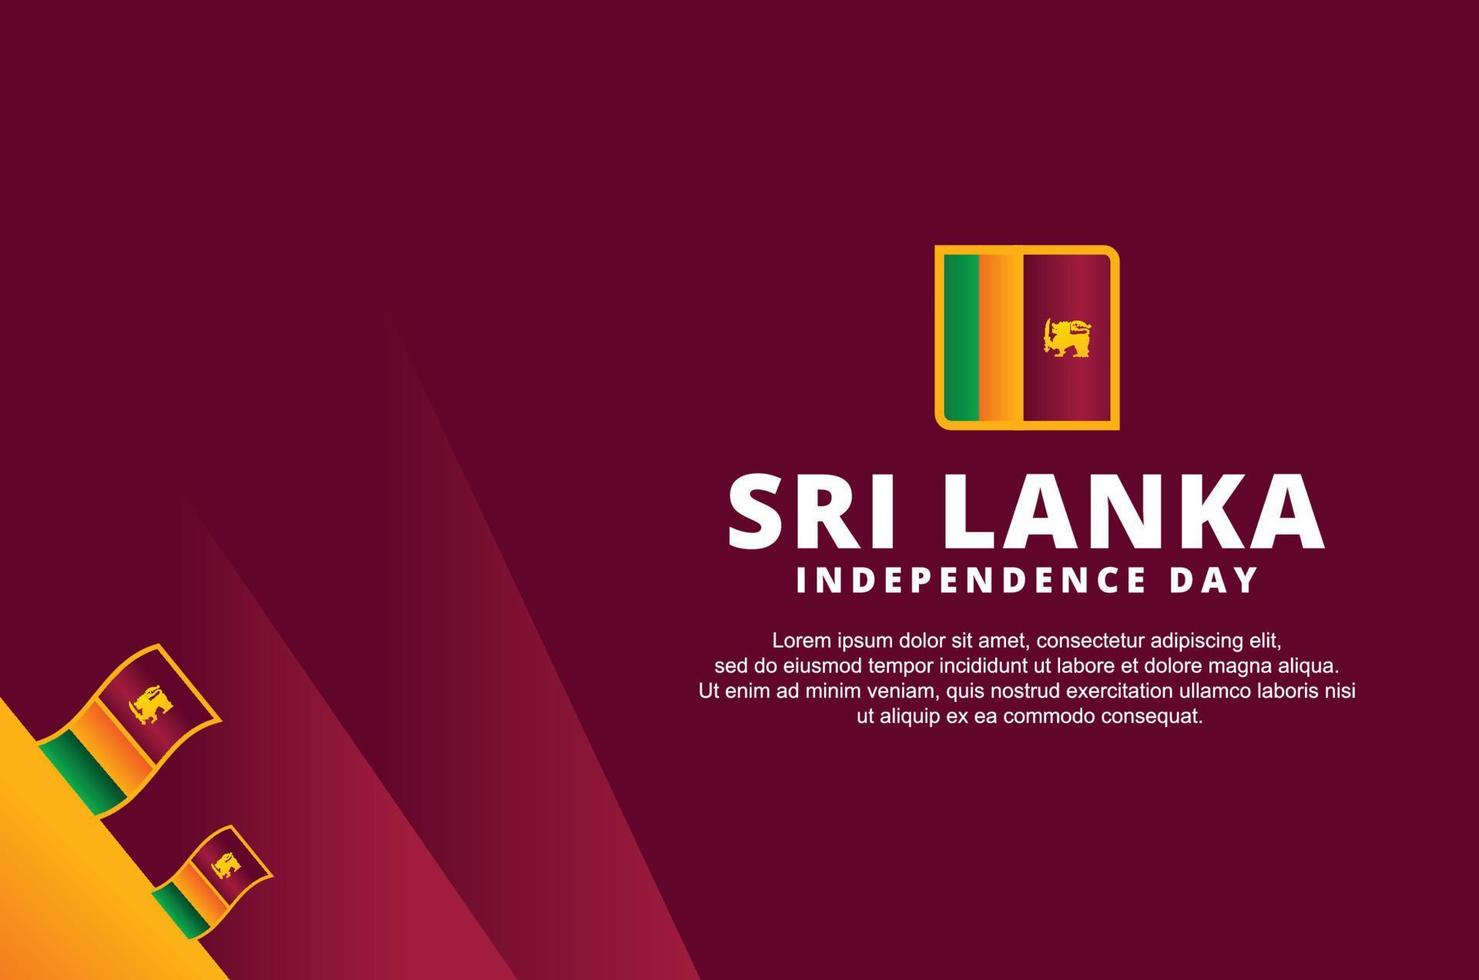 Sri Lanka Independence Day Design vector